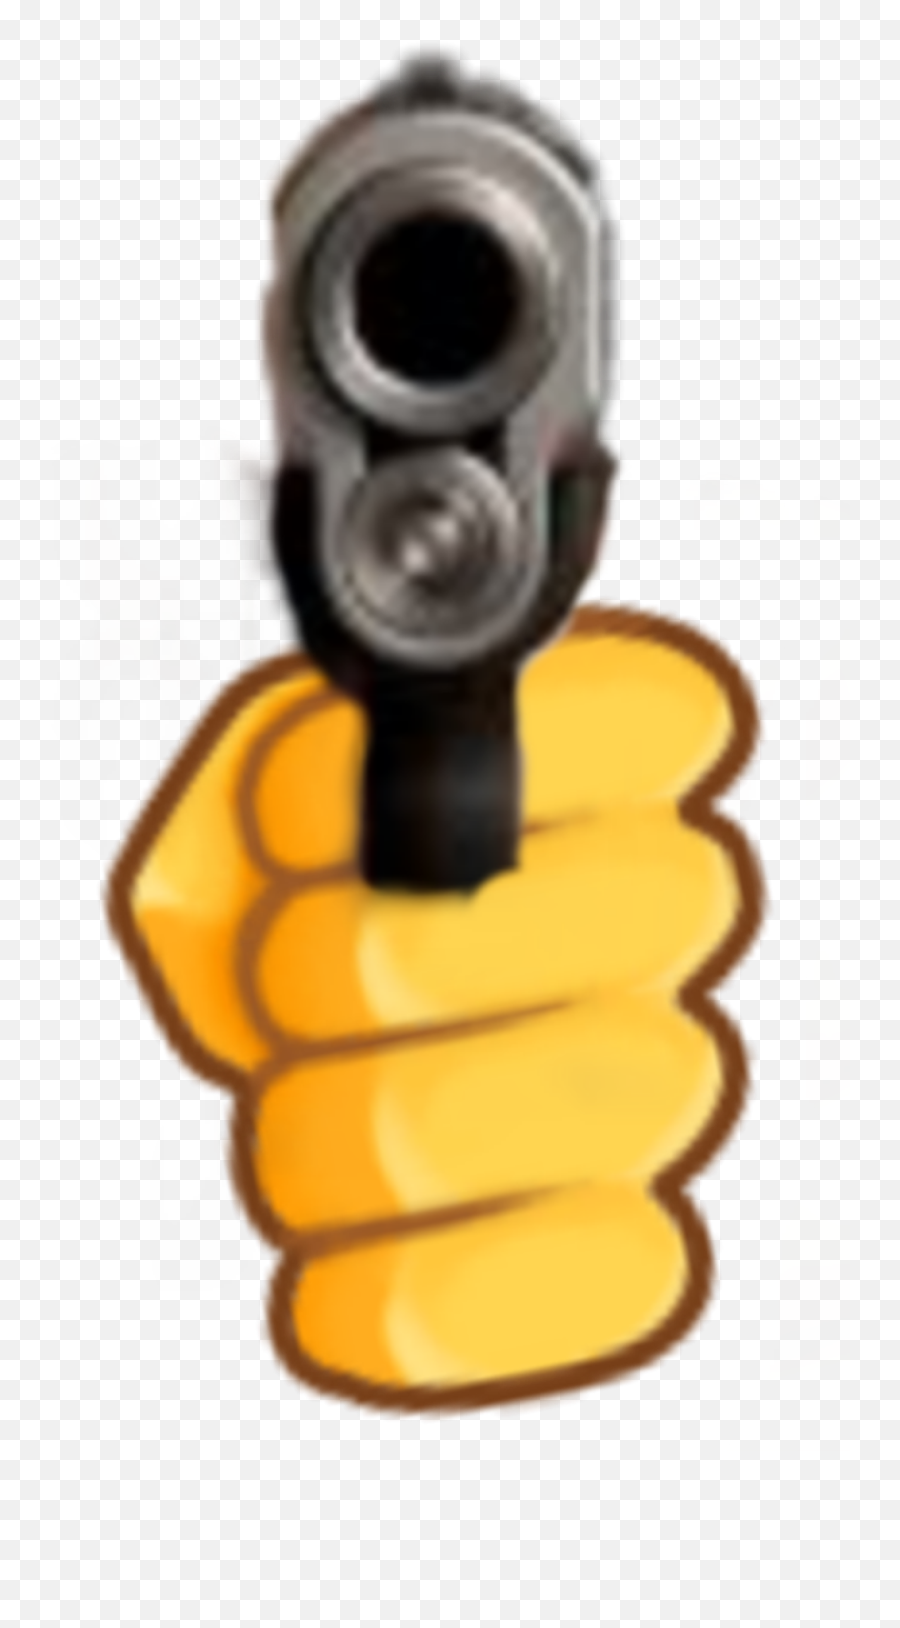 Download Emoji Sticker - Firearm Png Image With No Emoji Hand With Gun,Gun Emoji Png